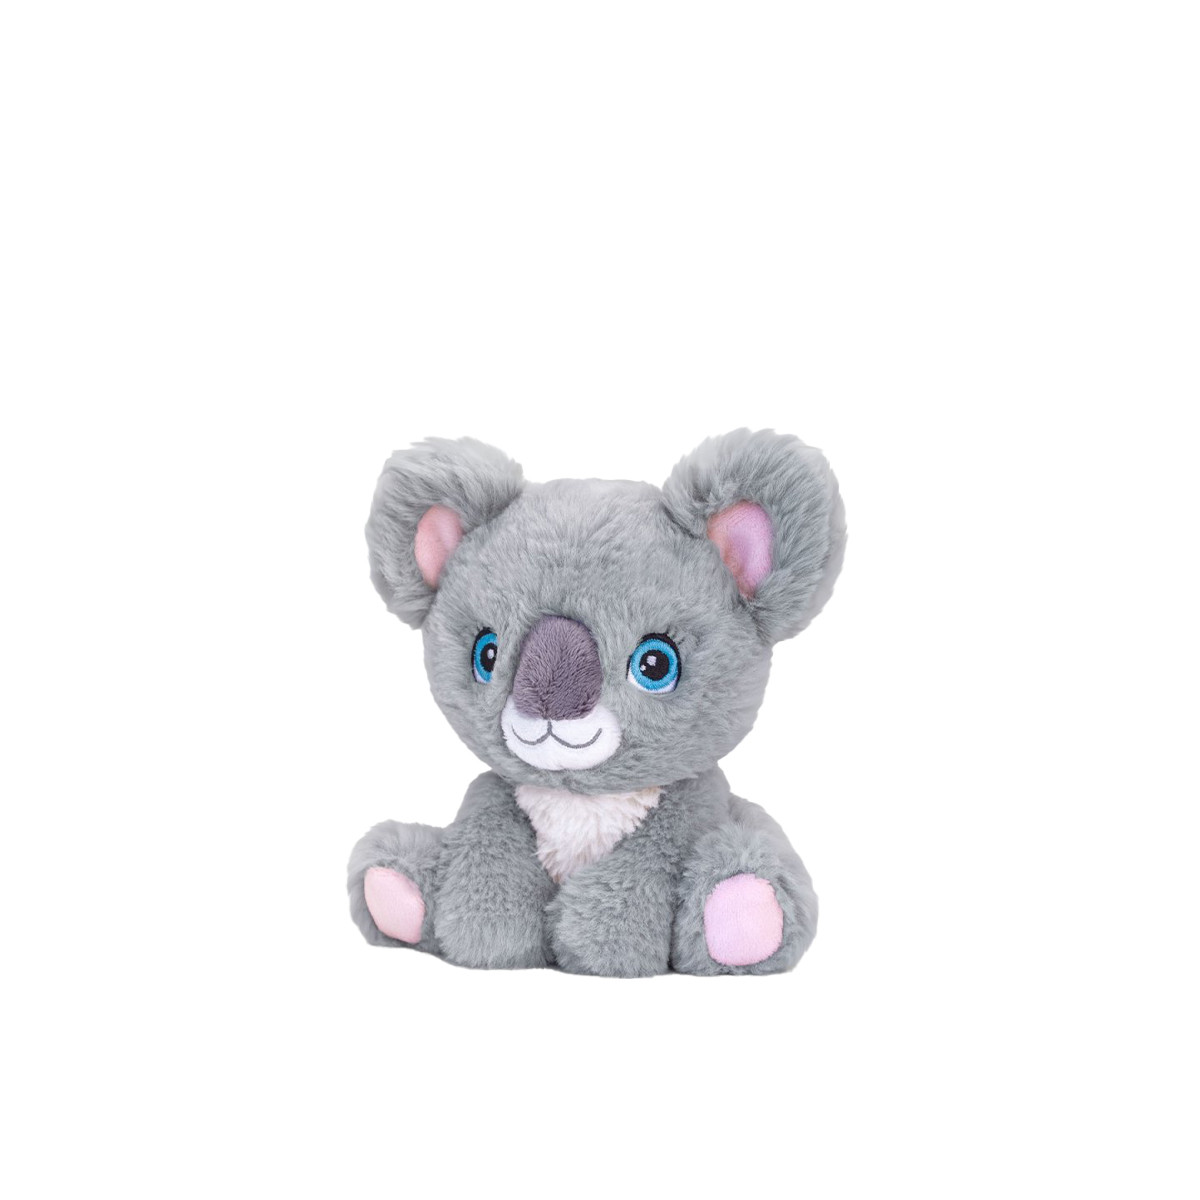 Keel Toys KOALA BEAR 20cm Grey WHITE Quality PLUSH Soft Toy 